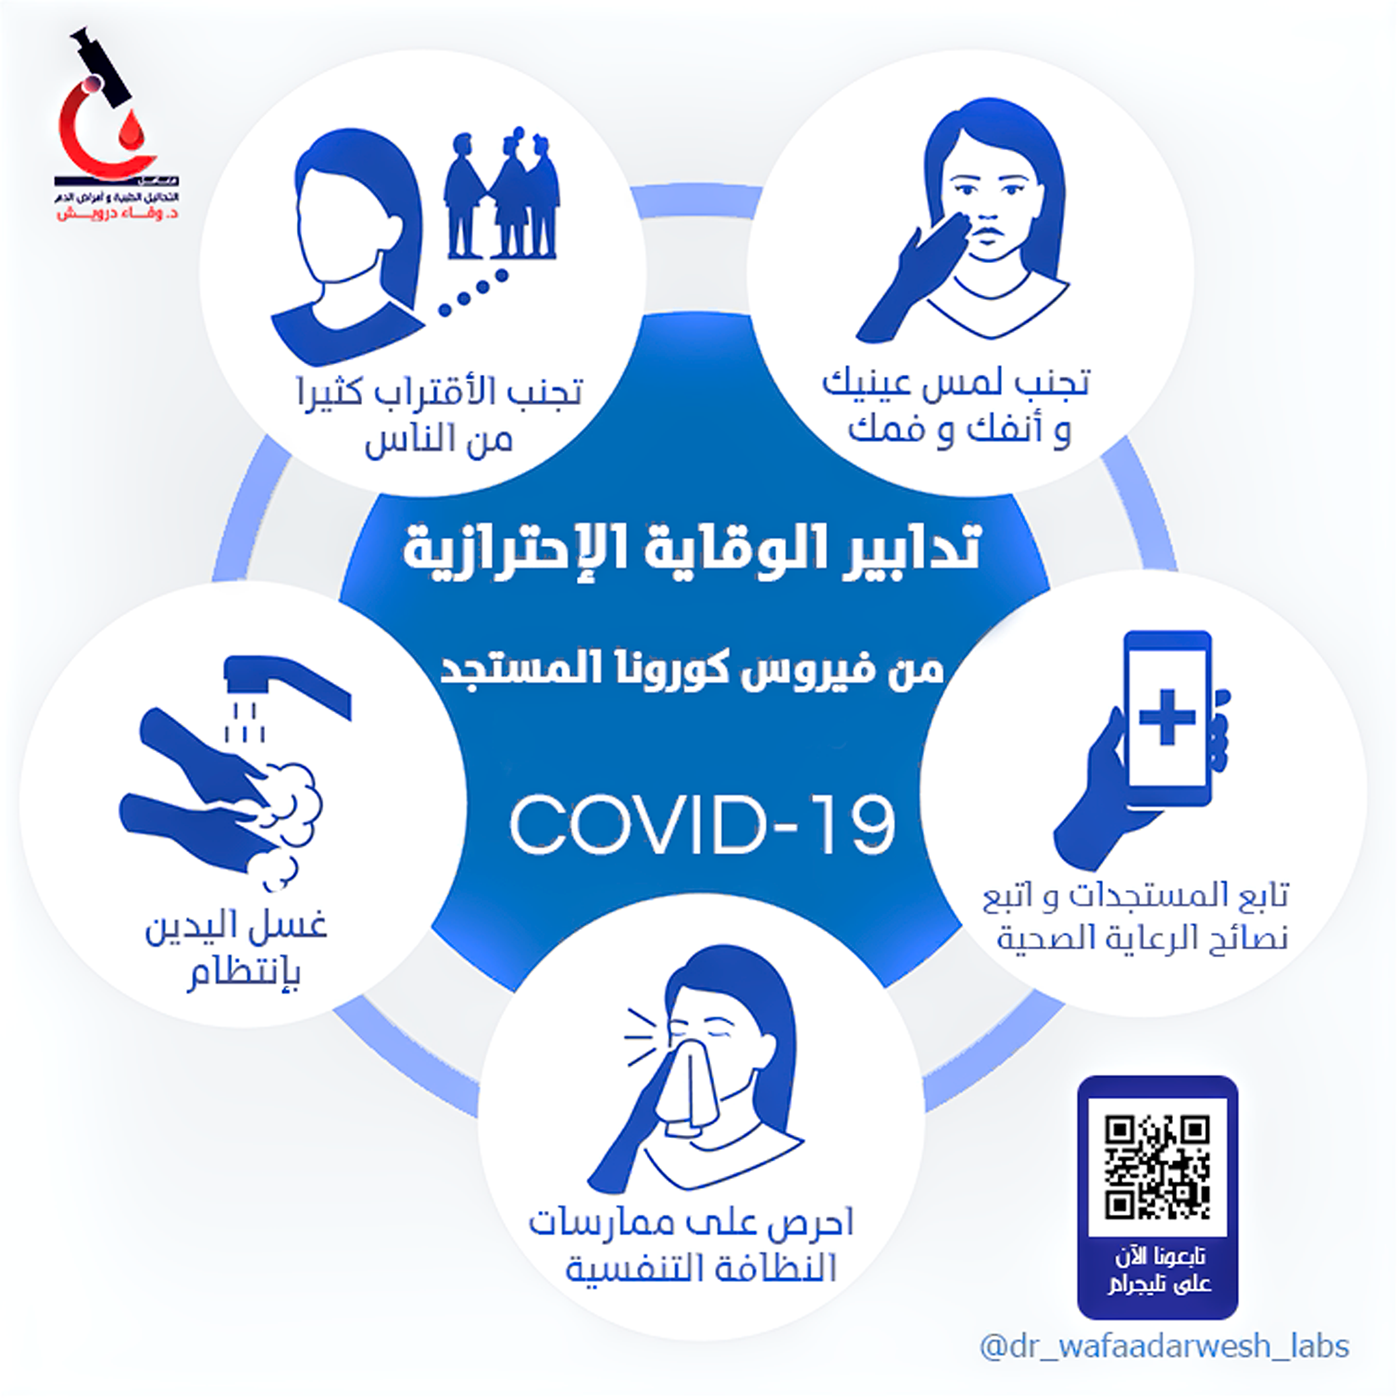 Coronavirus COVID-19 laboratory medical test معامل،معمل طبي،تحاليل